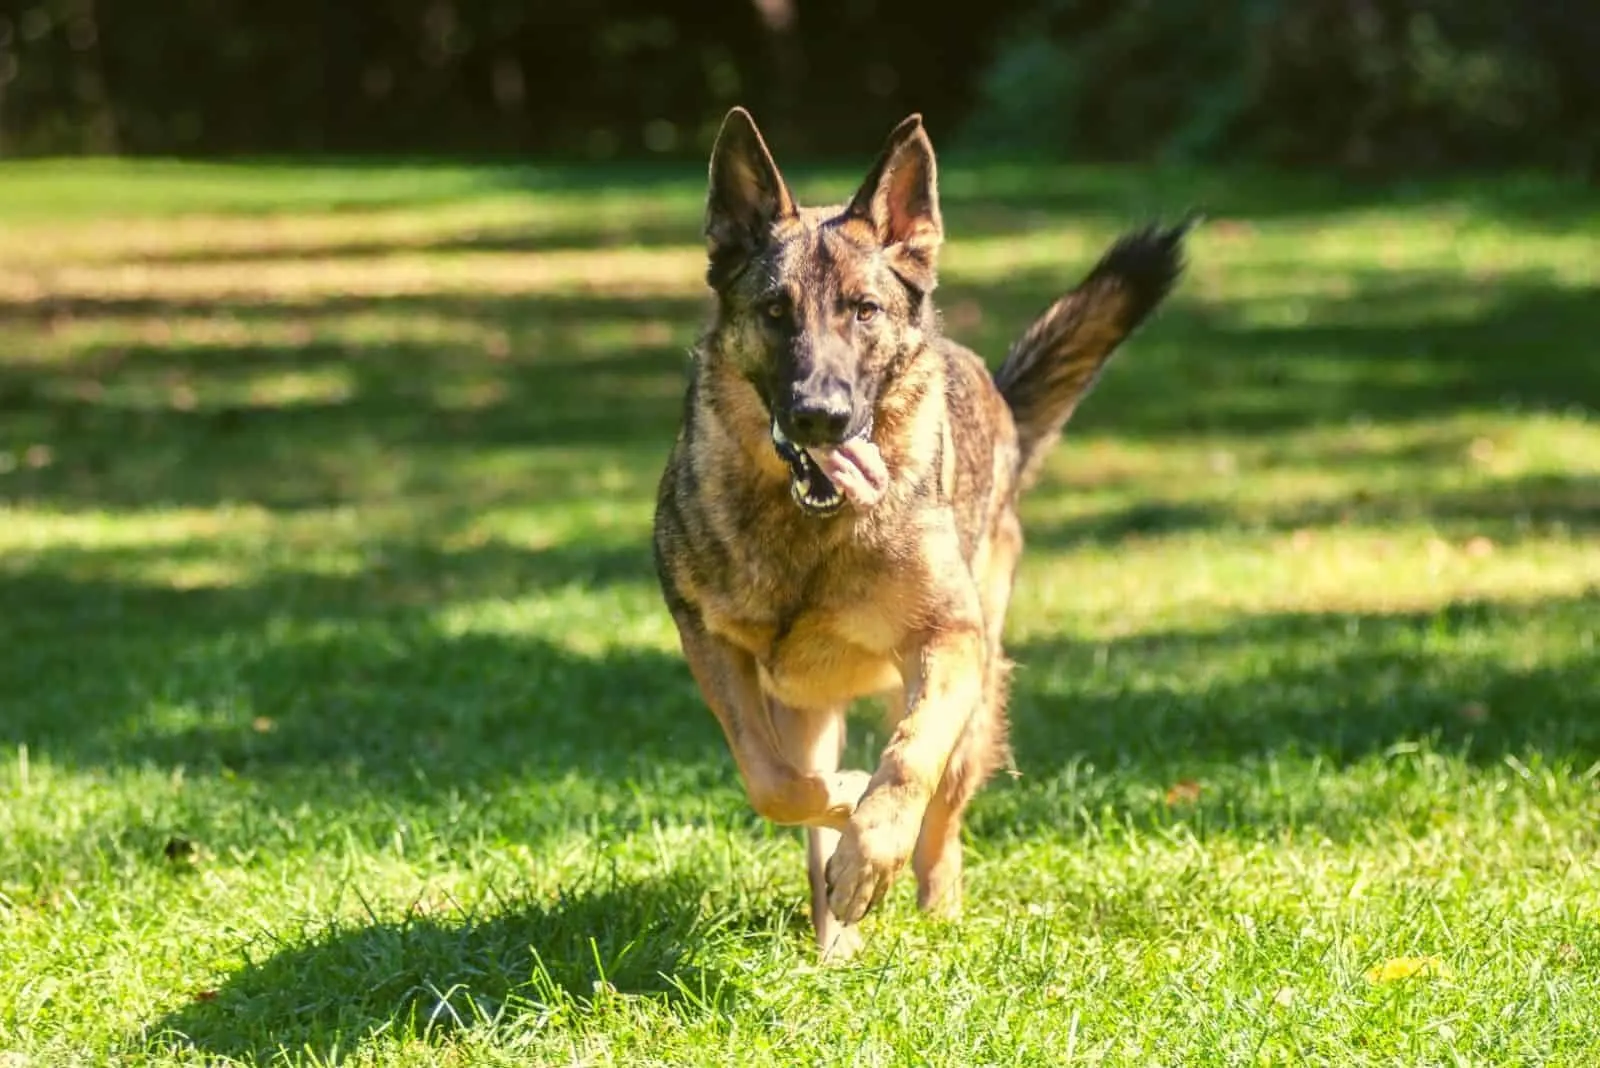 Sable German Shepherd dog running in the park